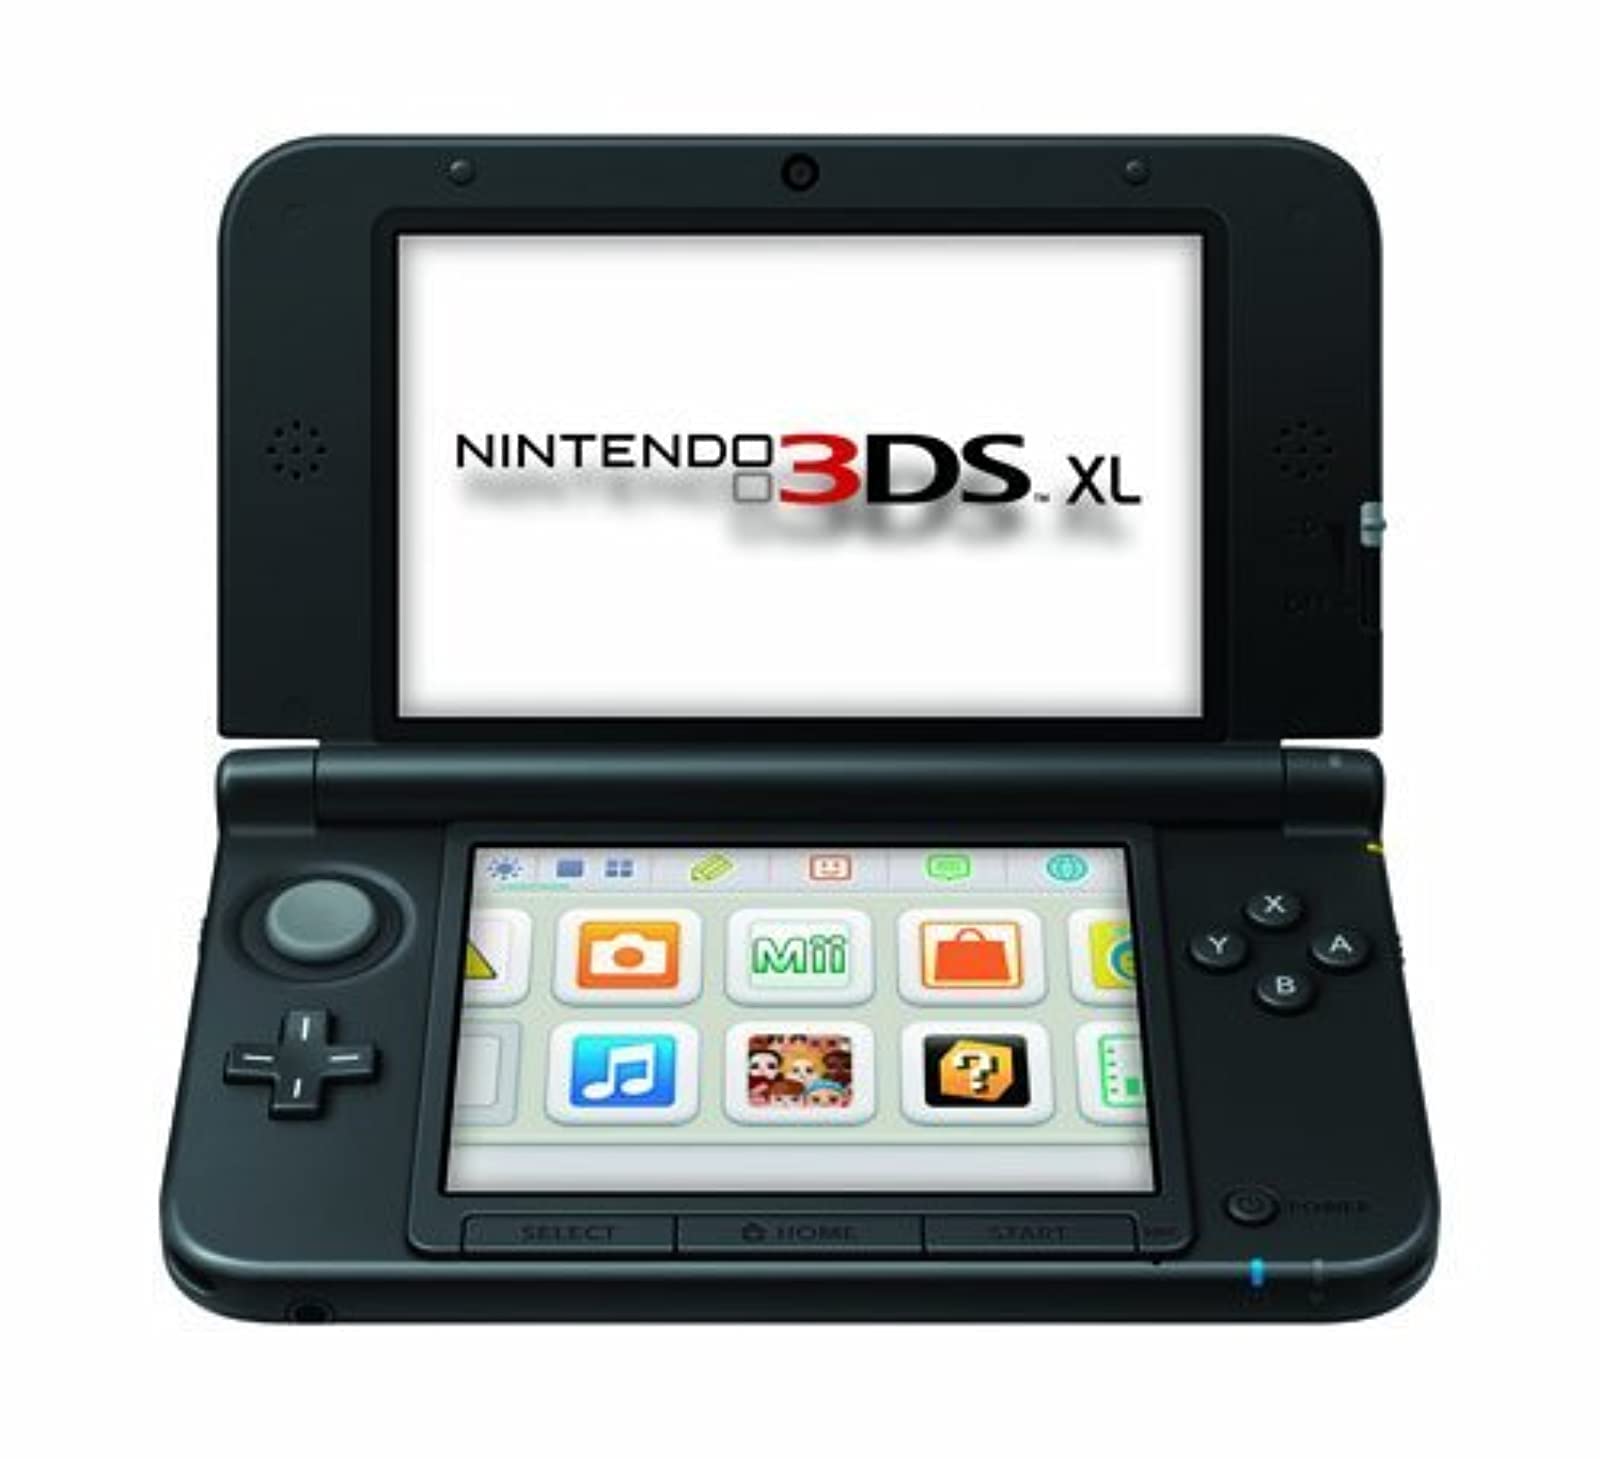 Nintendo 3DS XL Handheld System - Black/Black (Renewed)